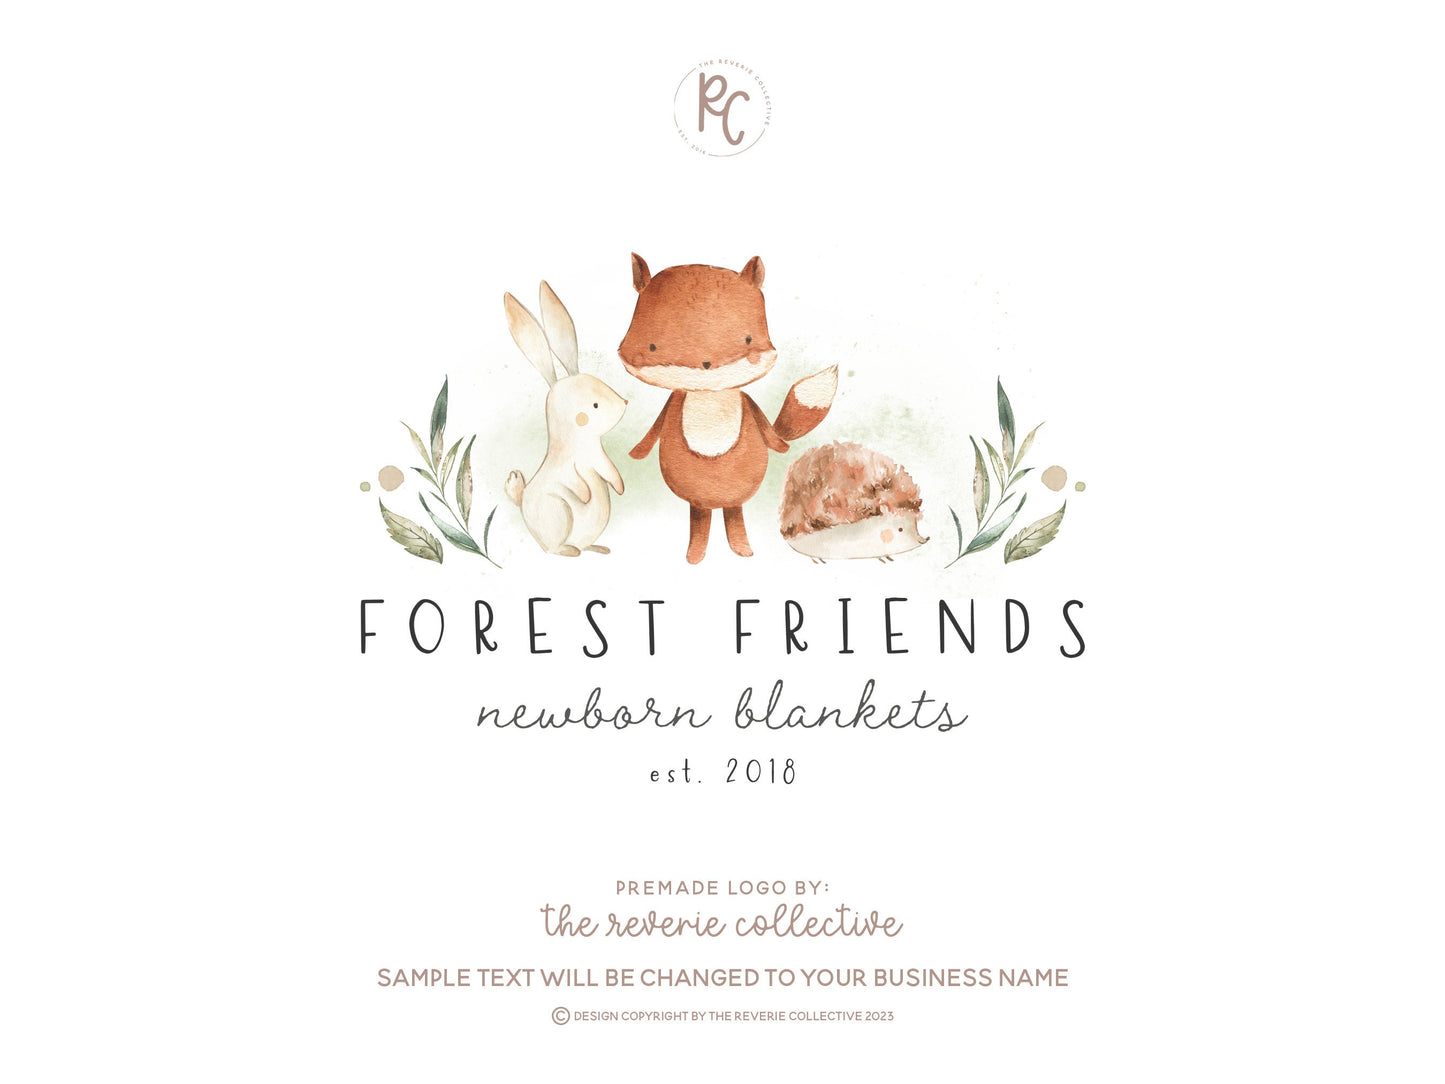 Forest Friends | Premade Logo Design | Hedgehog, Fox, Bunny Rabbit